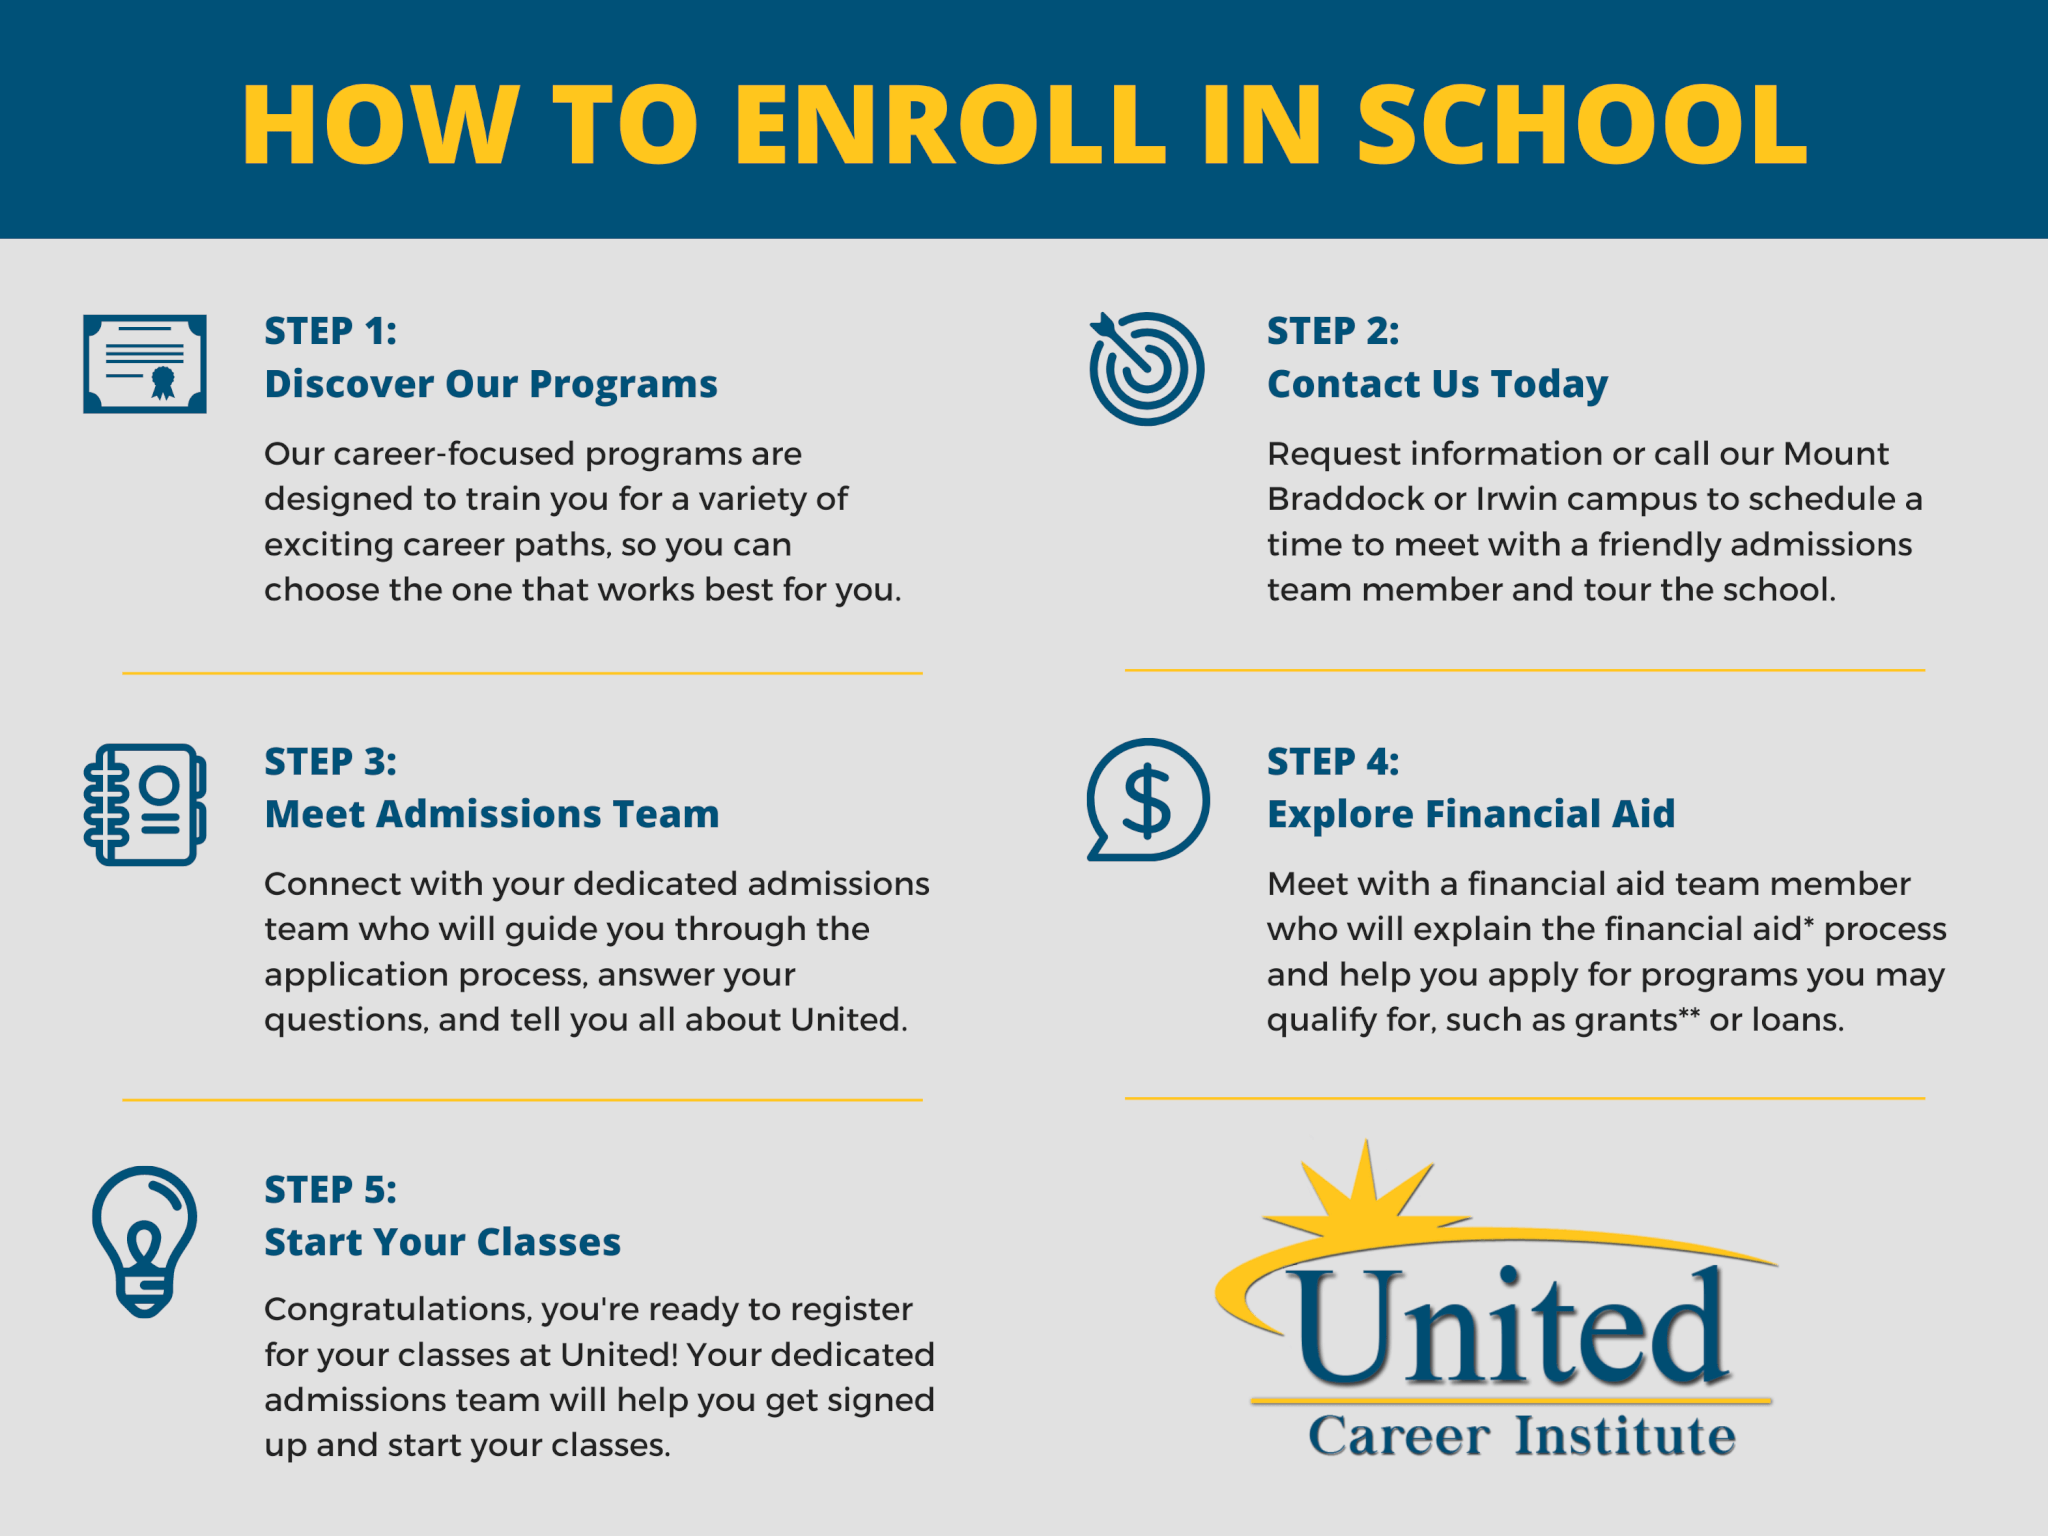 How To Enroll In School - United Career Institute